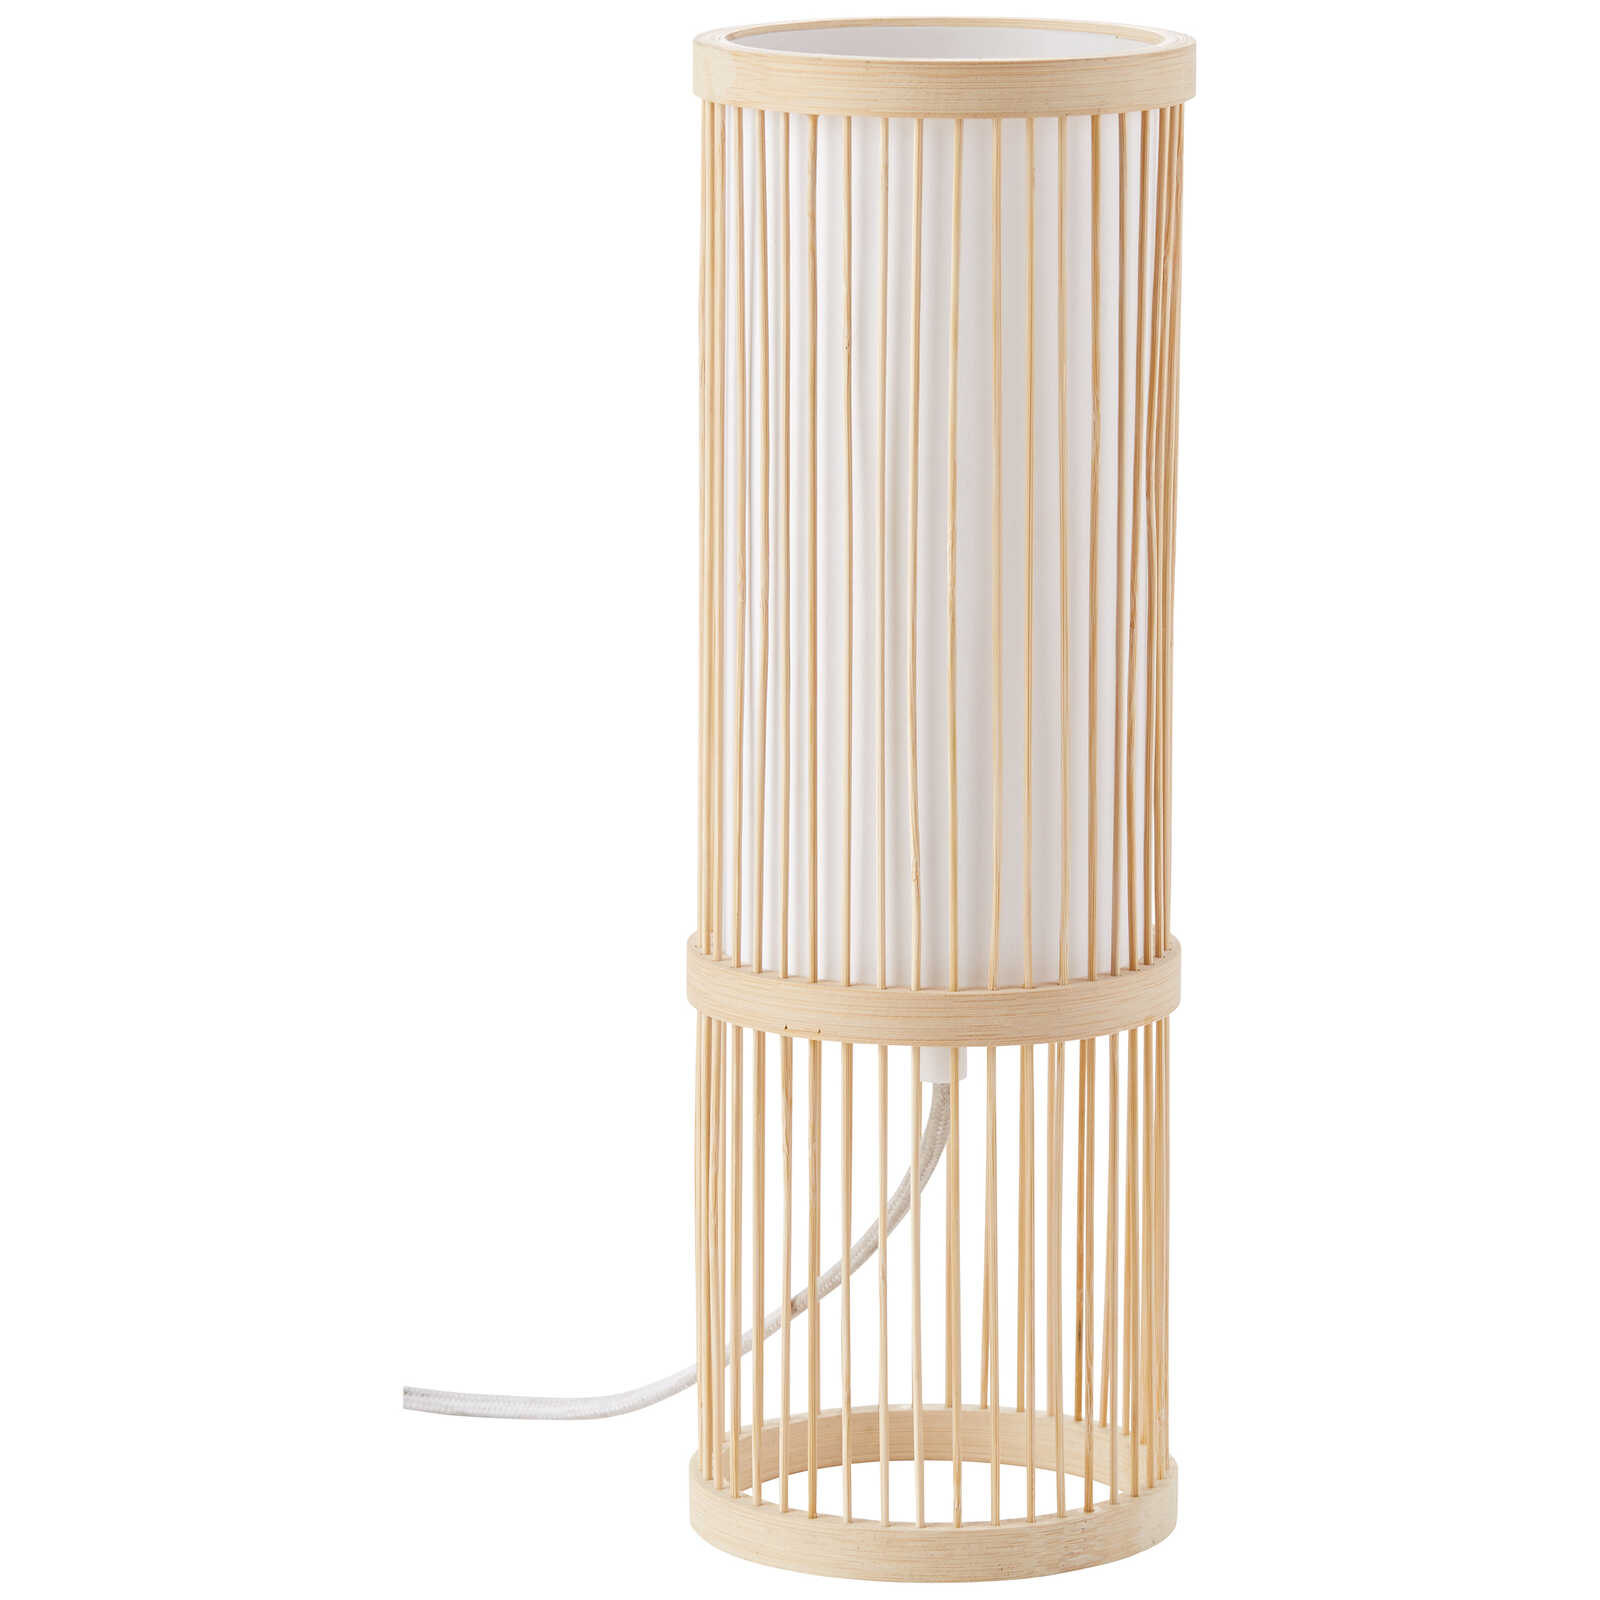             Lampe de table en bambou - Luise 2 - Marron
        